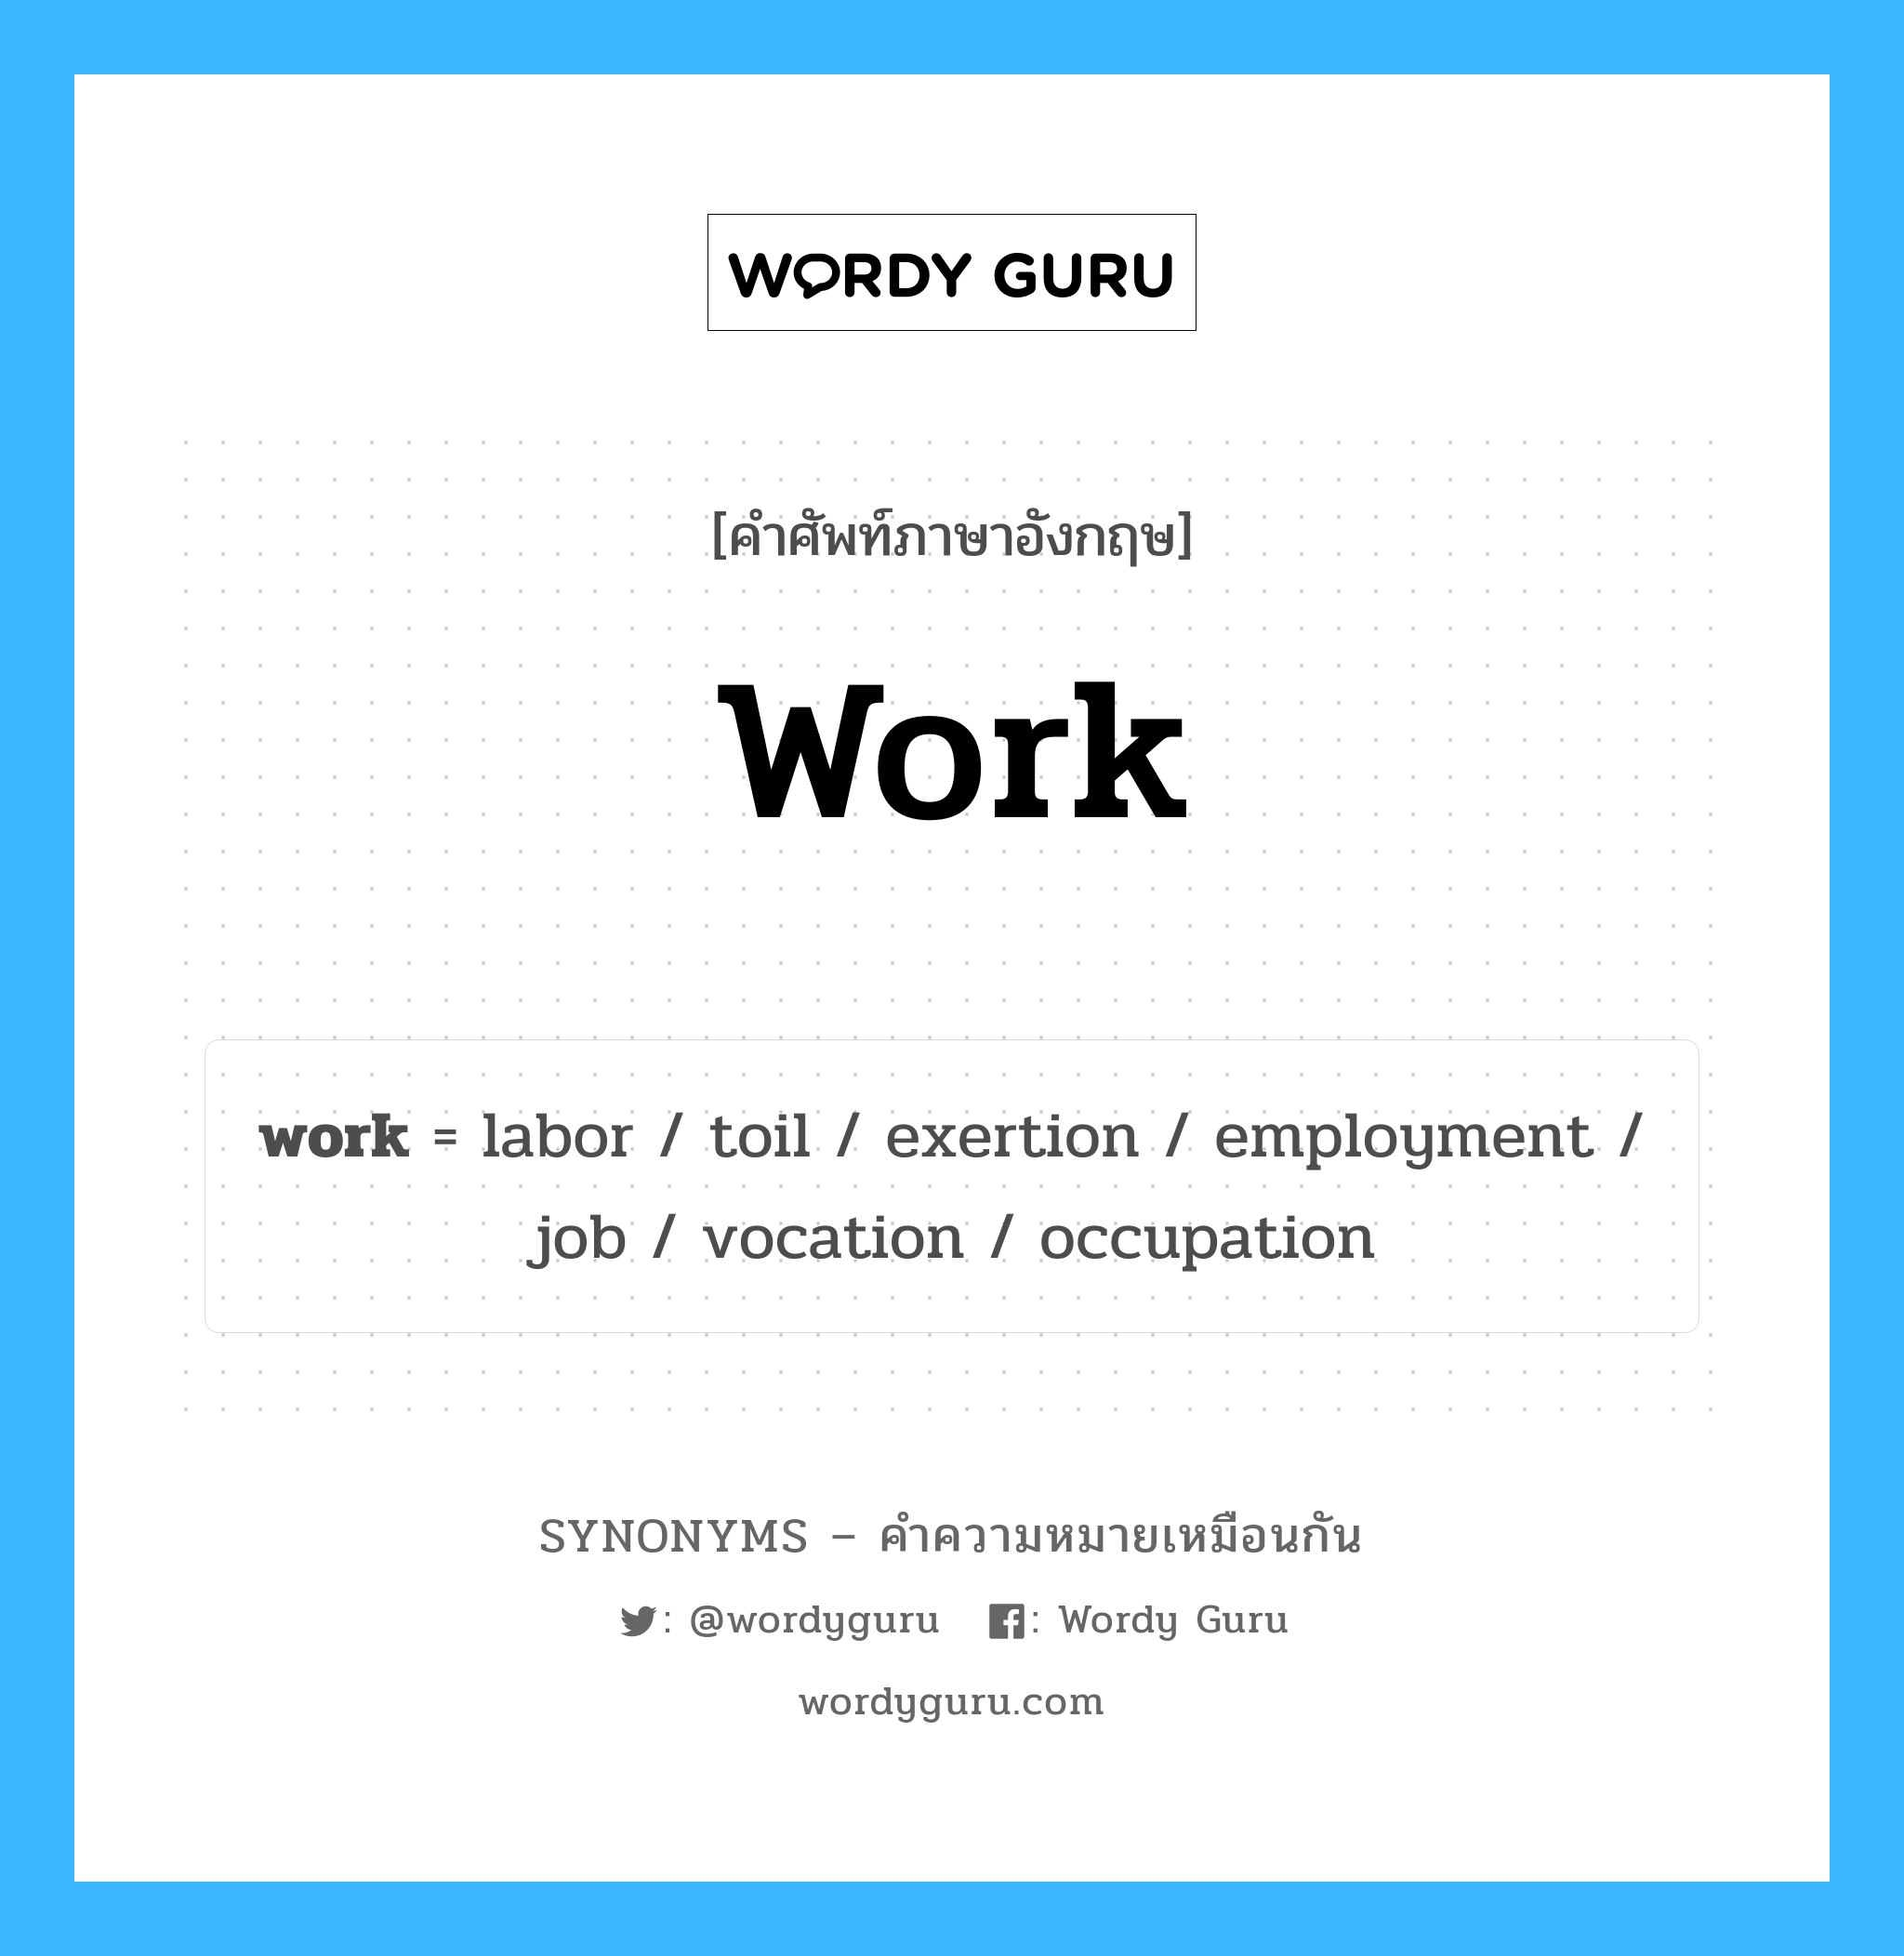 occupation เป็นหนึ่งใน job และมีคำอื่น ๆ อีกดังนี้, คำศัพท์ภาษาอังกฤษ occupation ความหมายคล้ายกันกับ work แปลว่า อาชีพ หมวด work